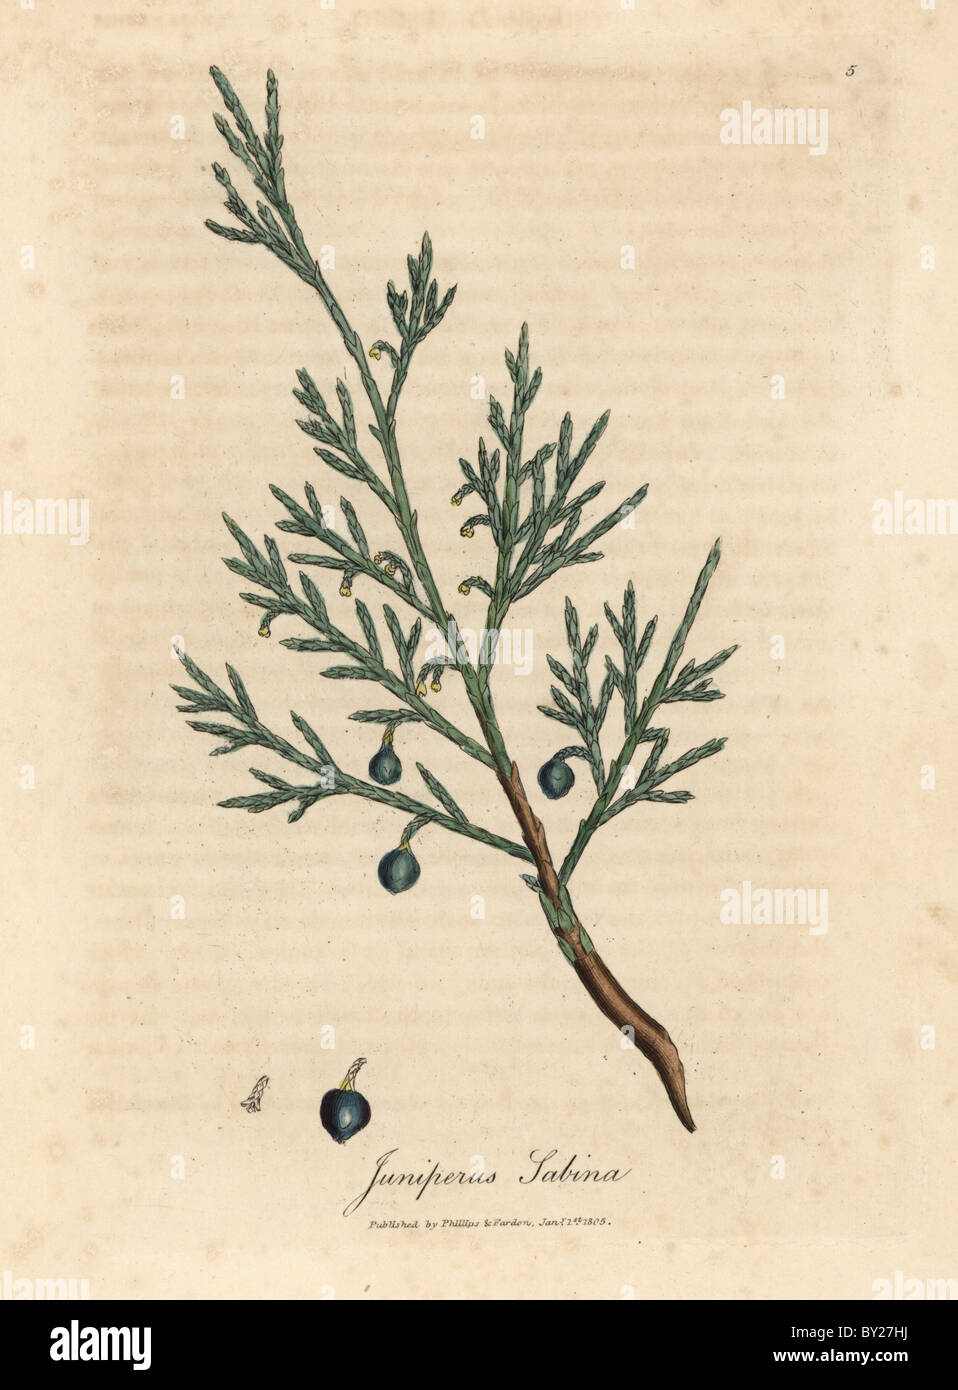 Common savin branch and berry, Juniperus sabina. Stock Photo